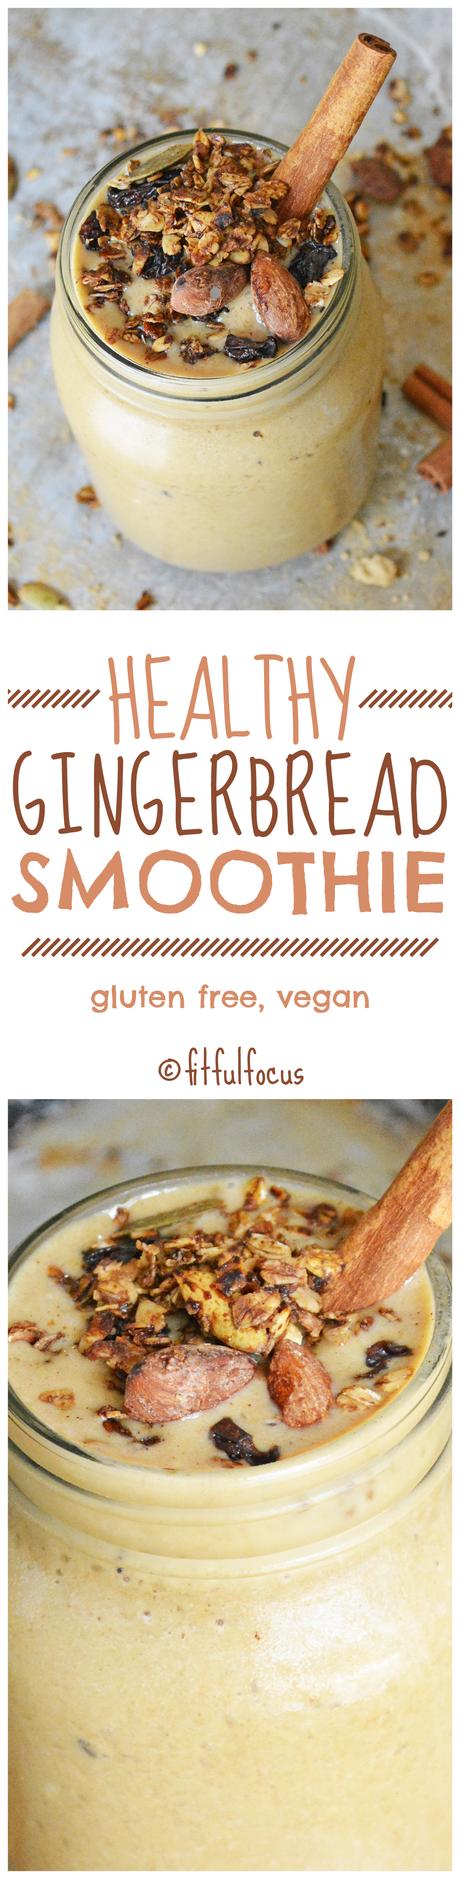 Healthy Gingerbread Smoothie (gluten free, vegan)